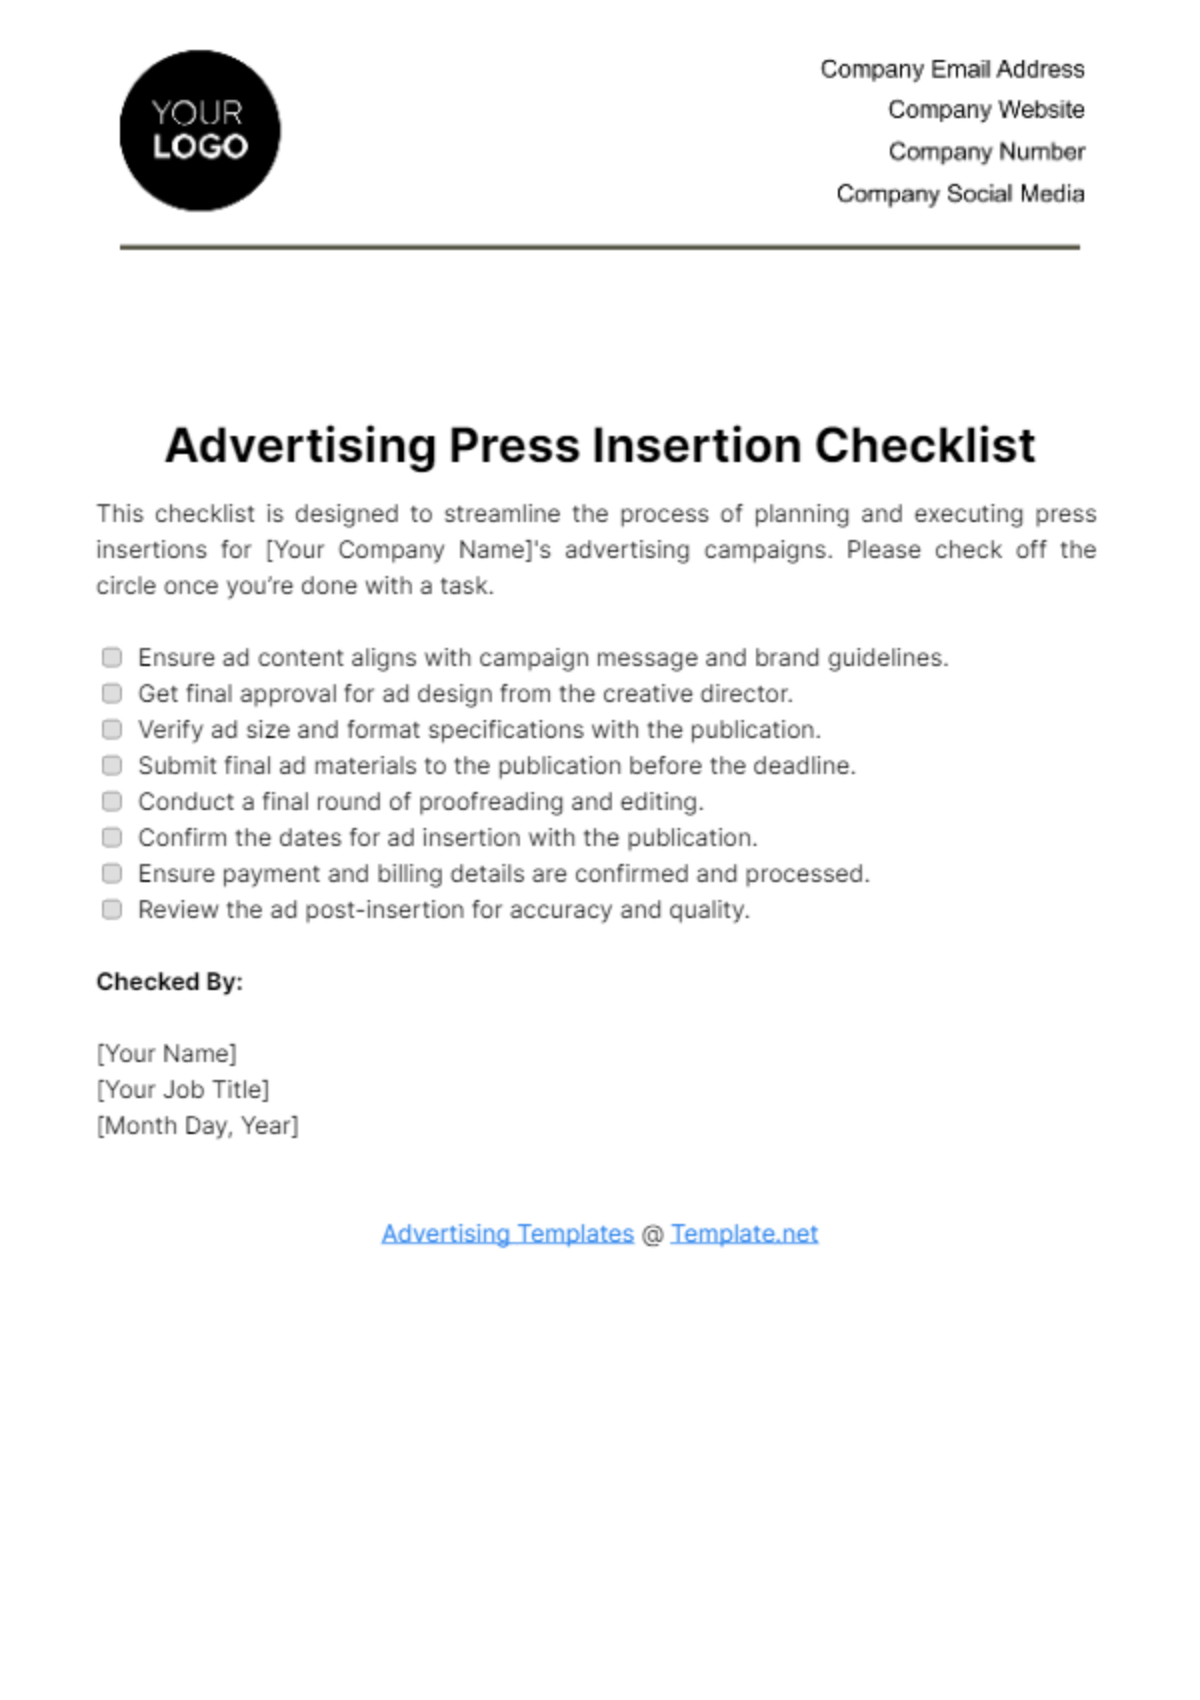 Free Advertising Press Insertion Checklist Template